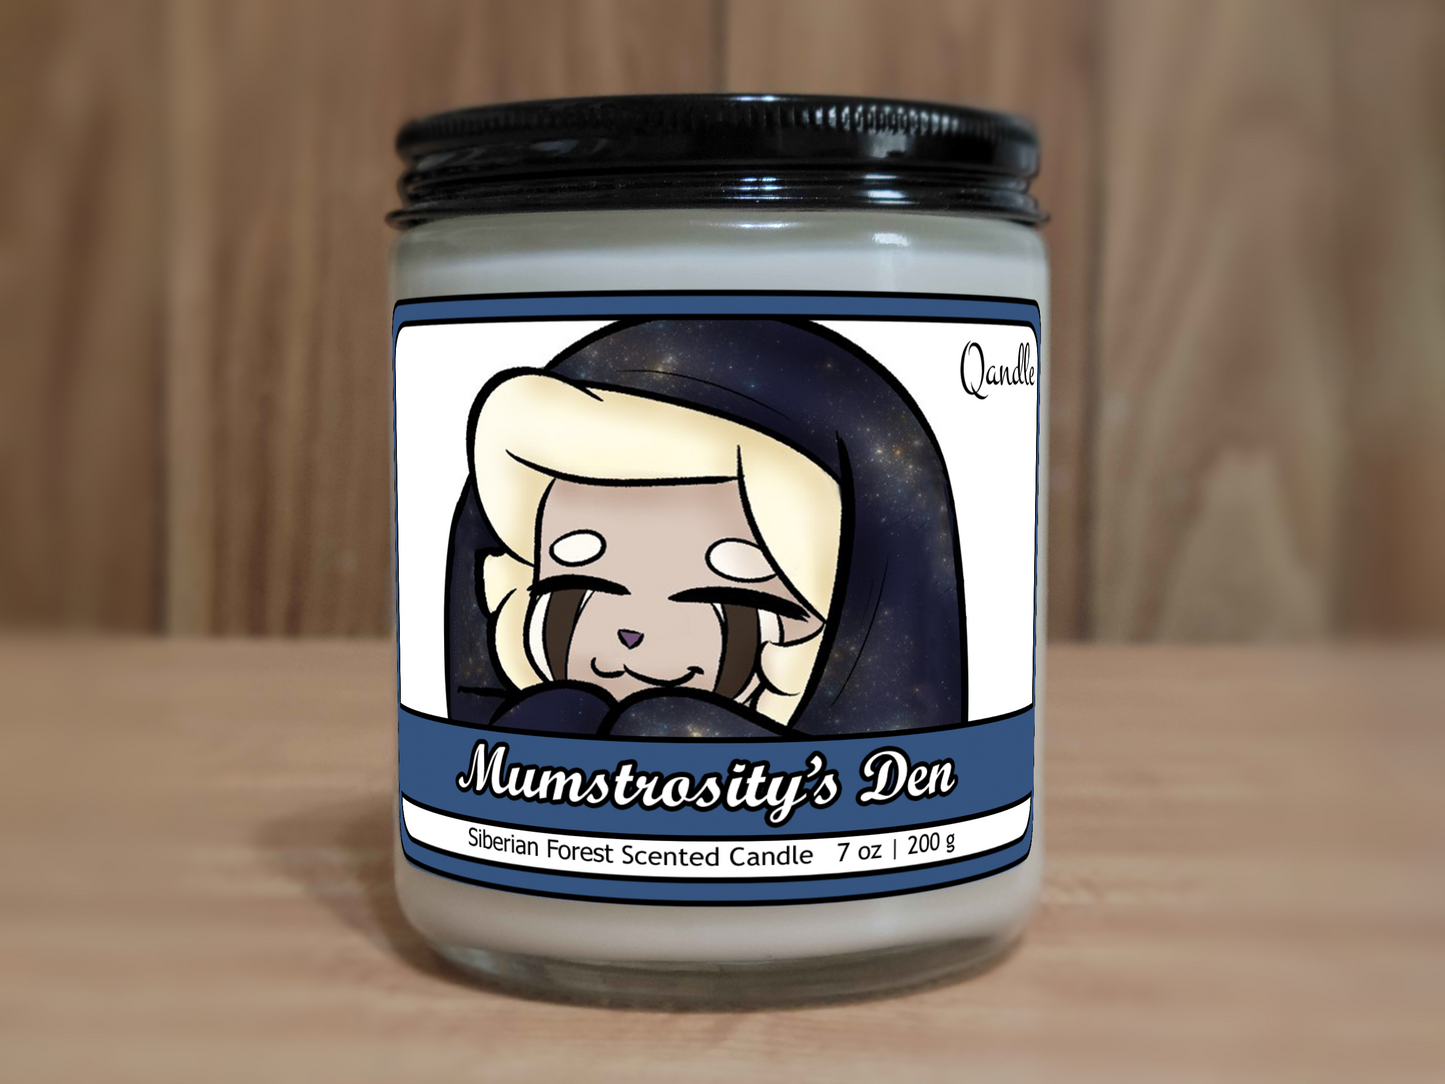 Mumstrosity’s Den Candle